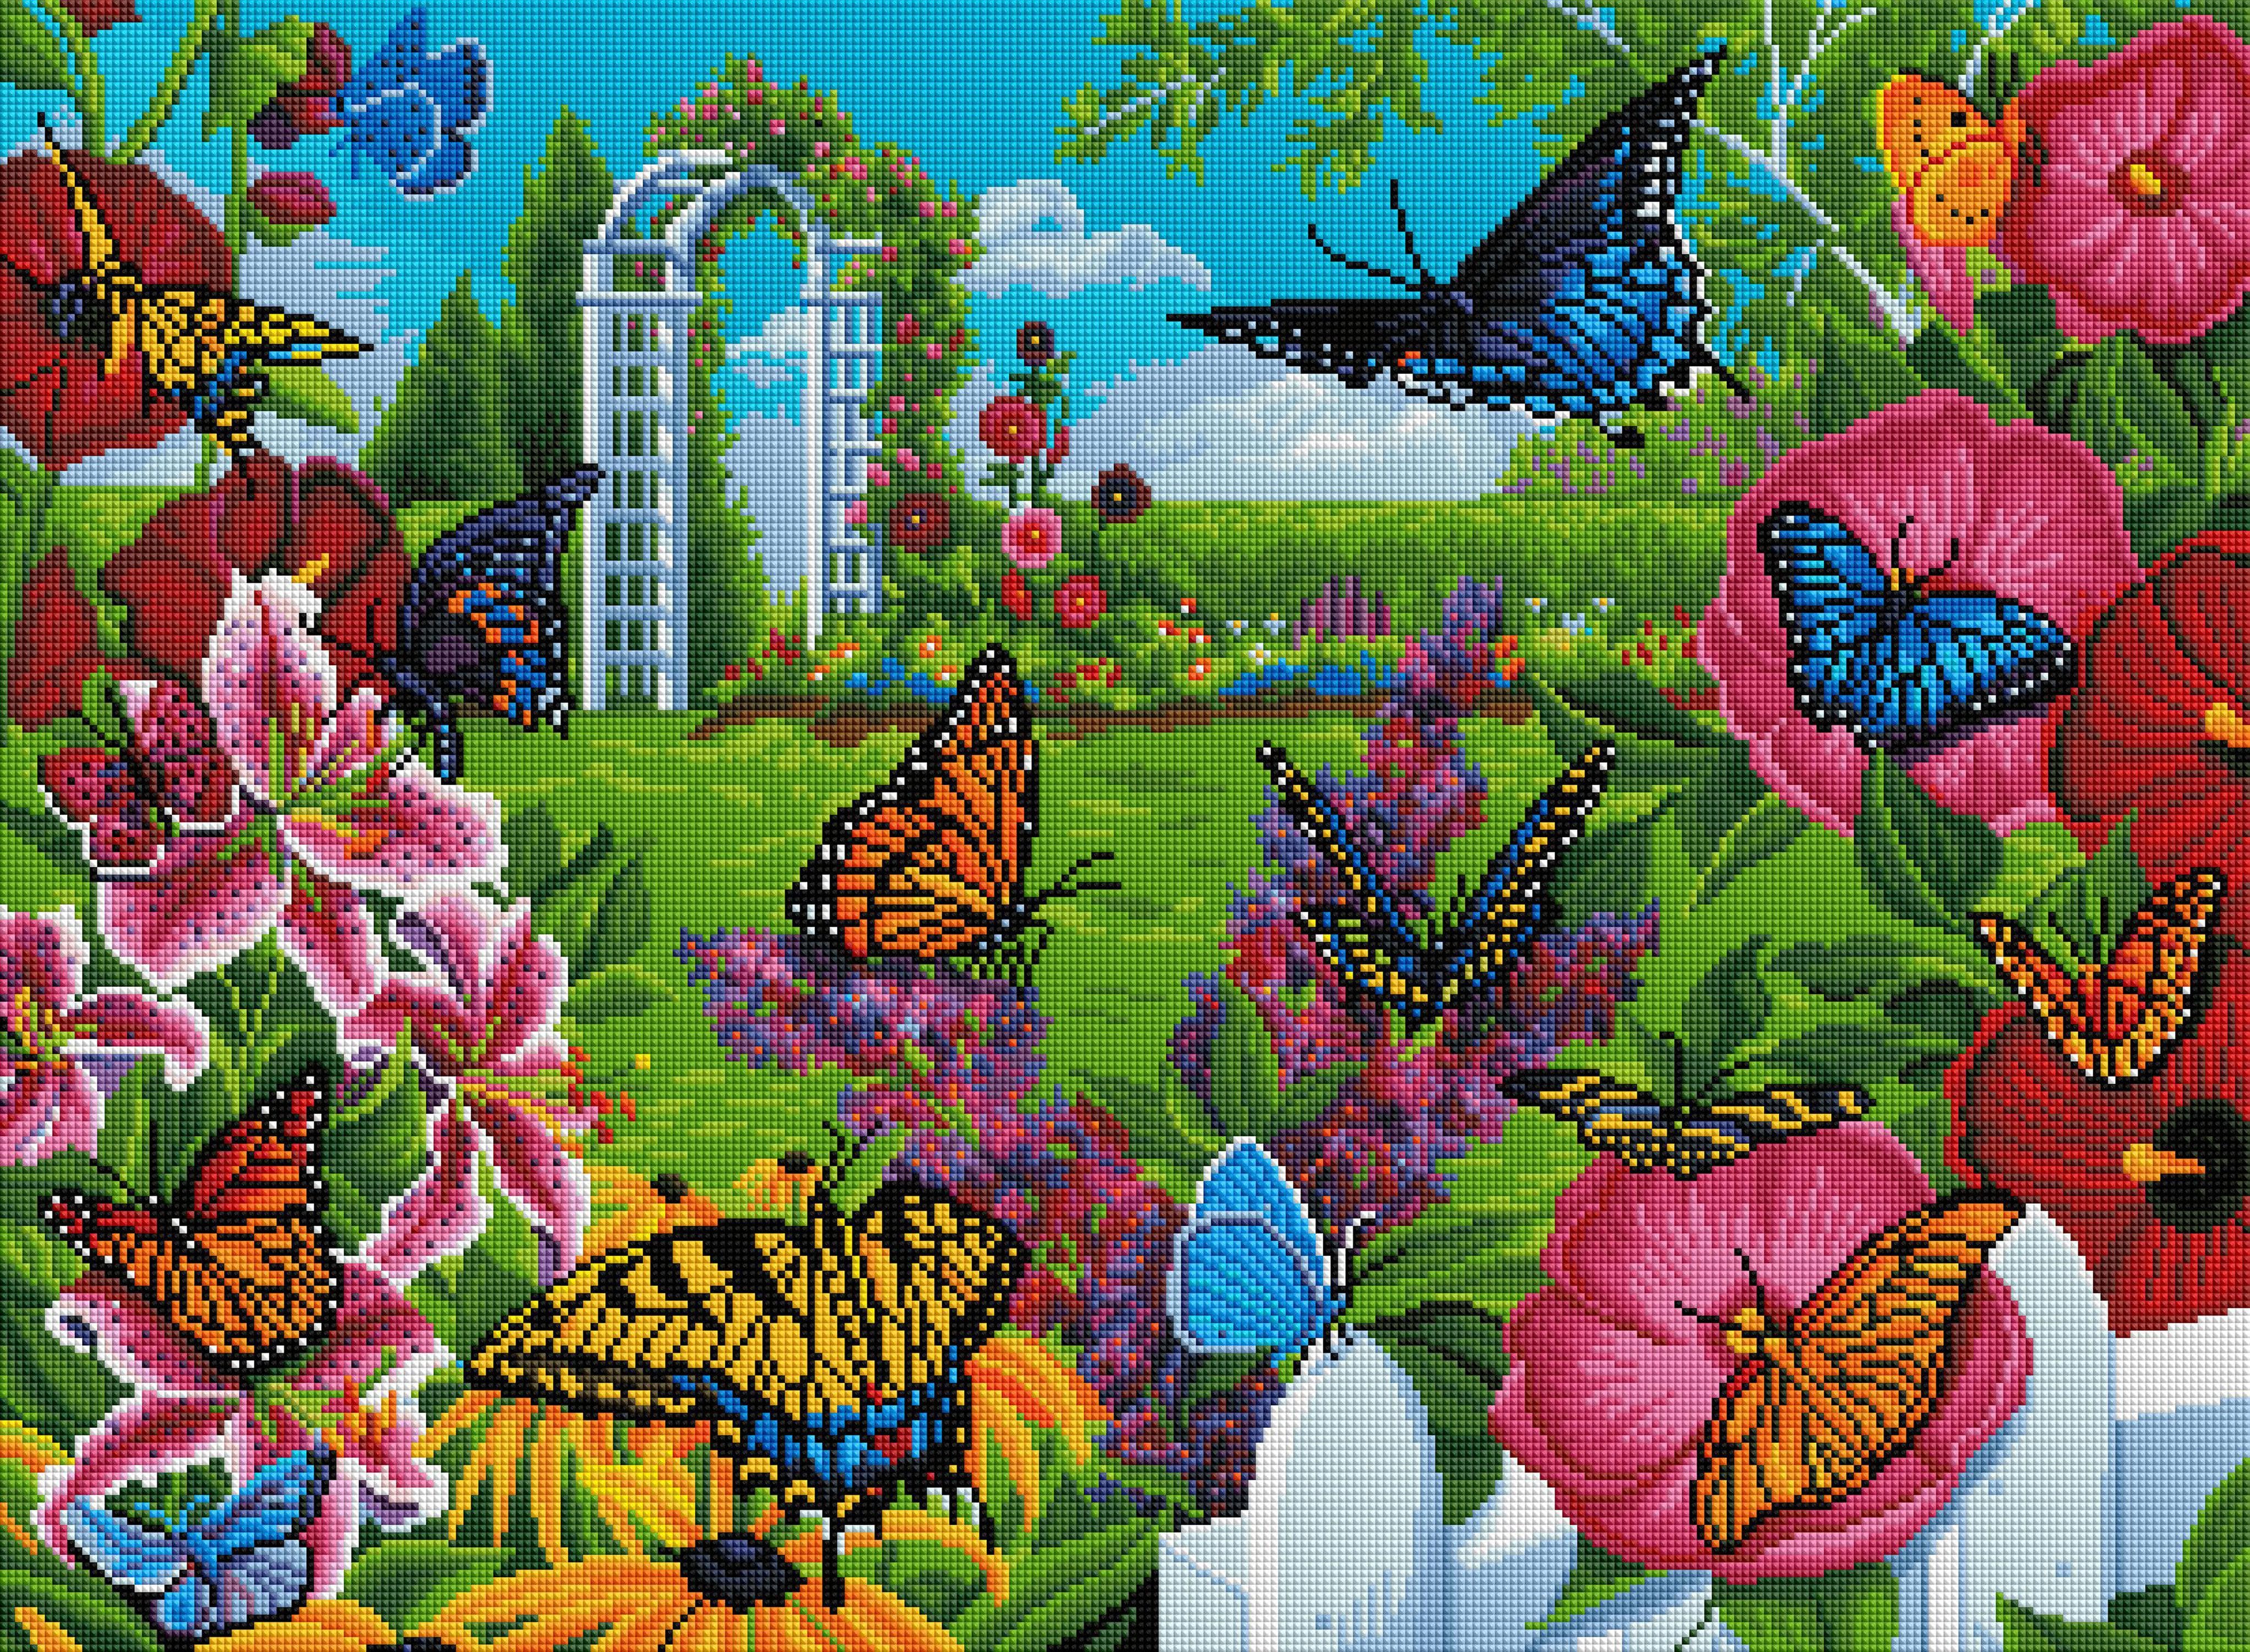 8 Piece DIY Diamond Painting Kit For Garden Yard Decor Butterfly